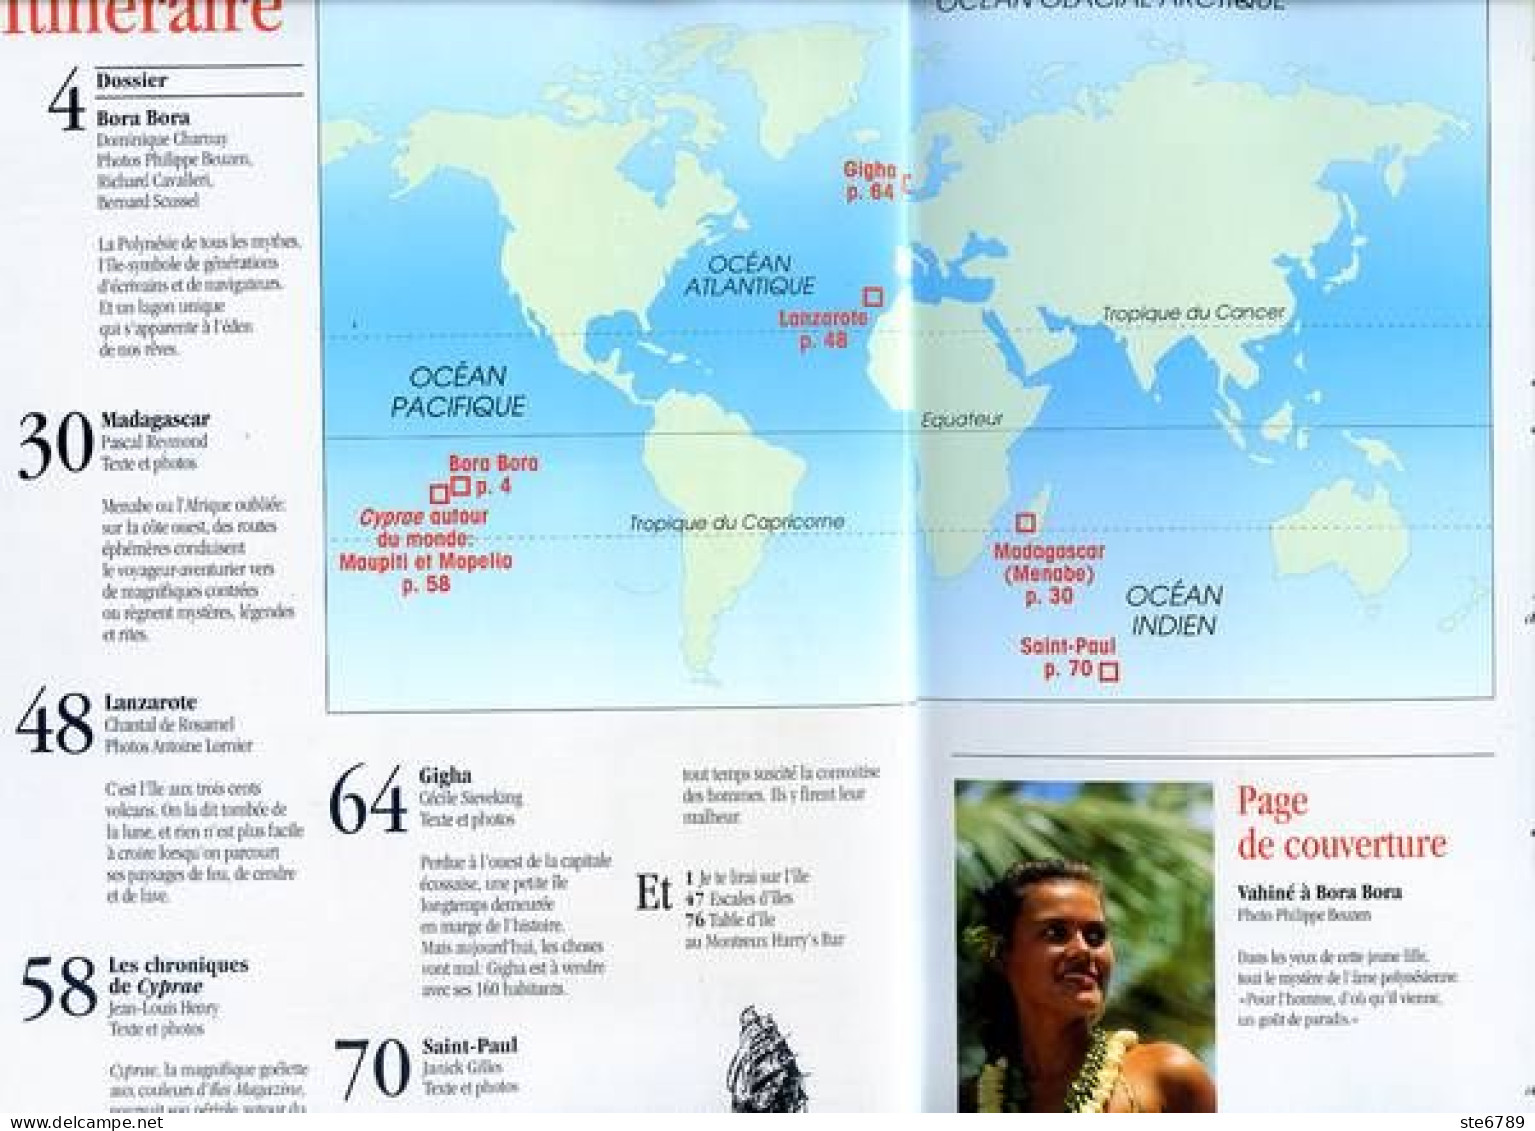 ILES MAGAZINE N° 23 Dossier Bora Bora , Madagascar , Lanzarote , Gigha , Saint Paul - Geographie